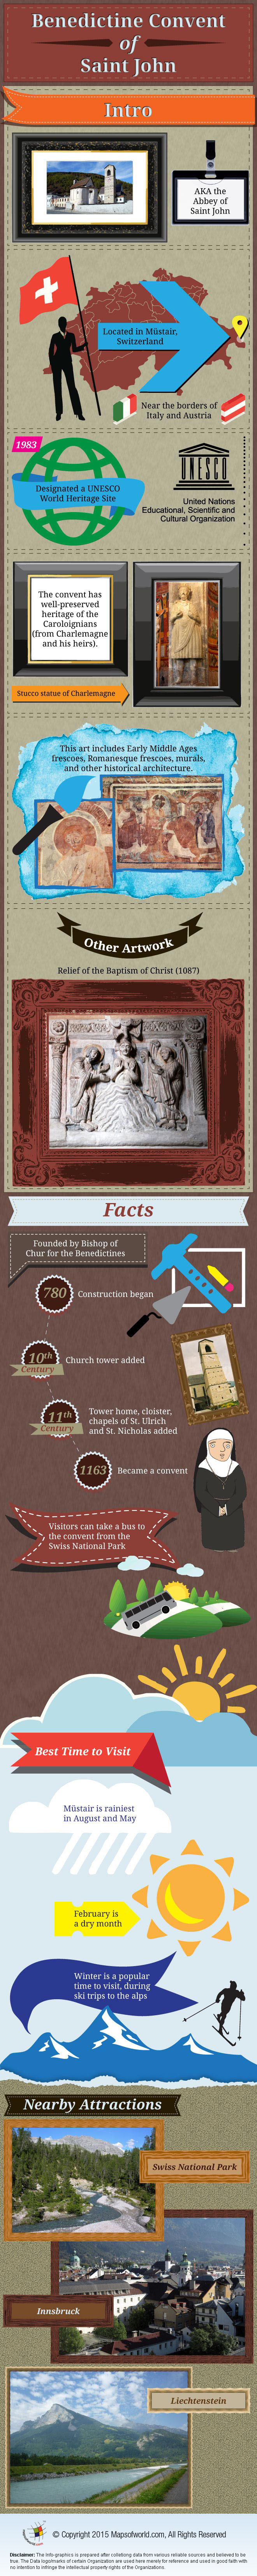 Benedictine Convent of Saint John Infographic